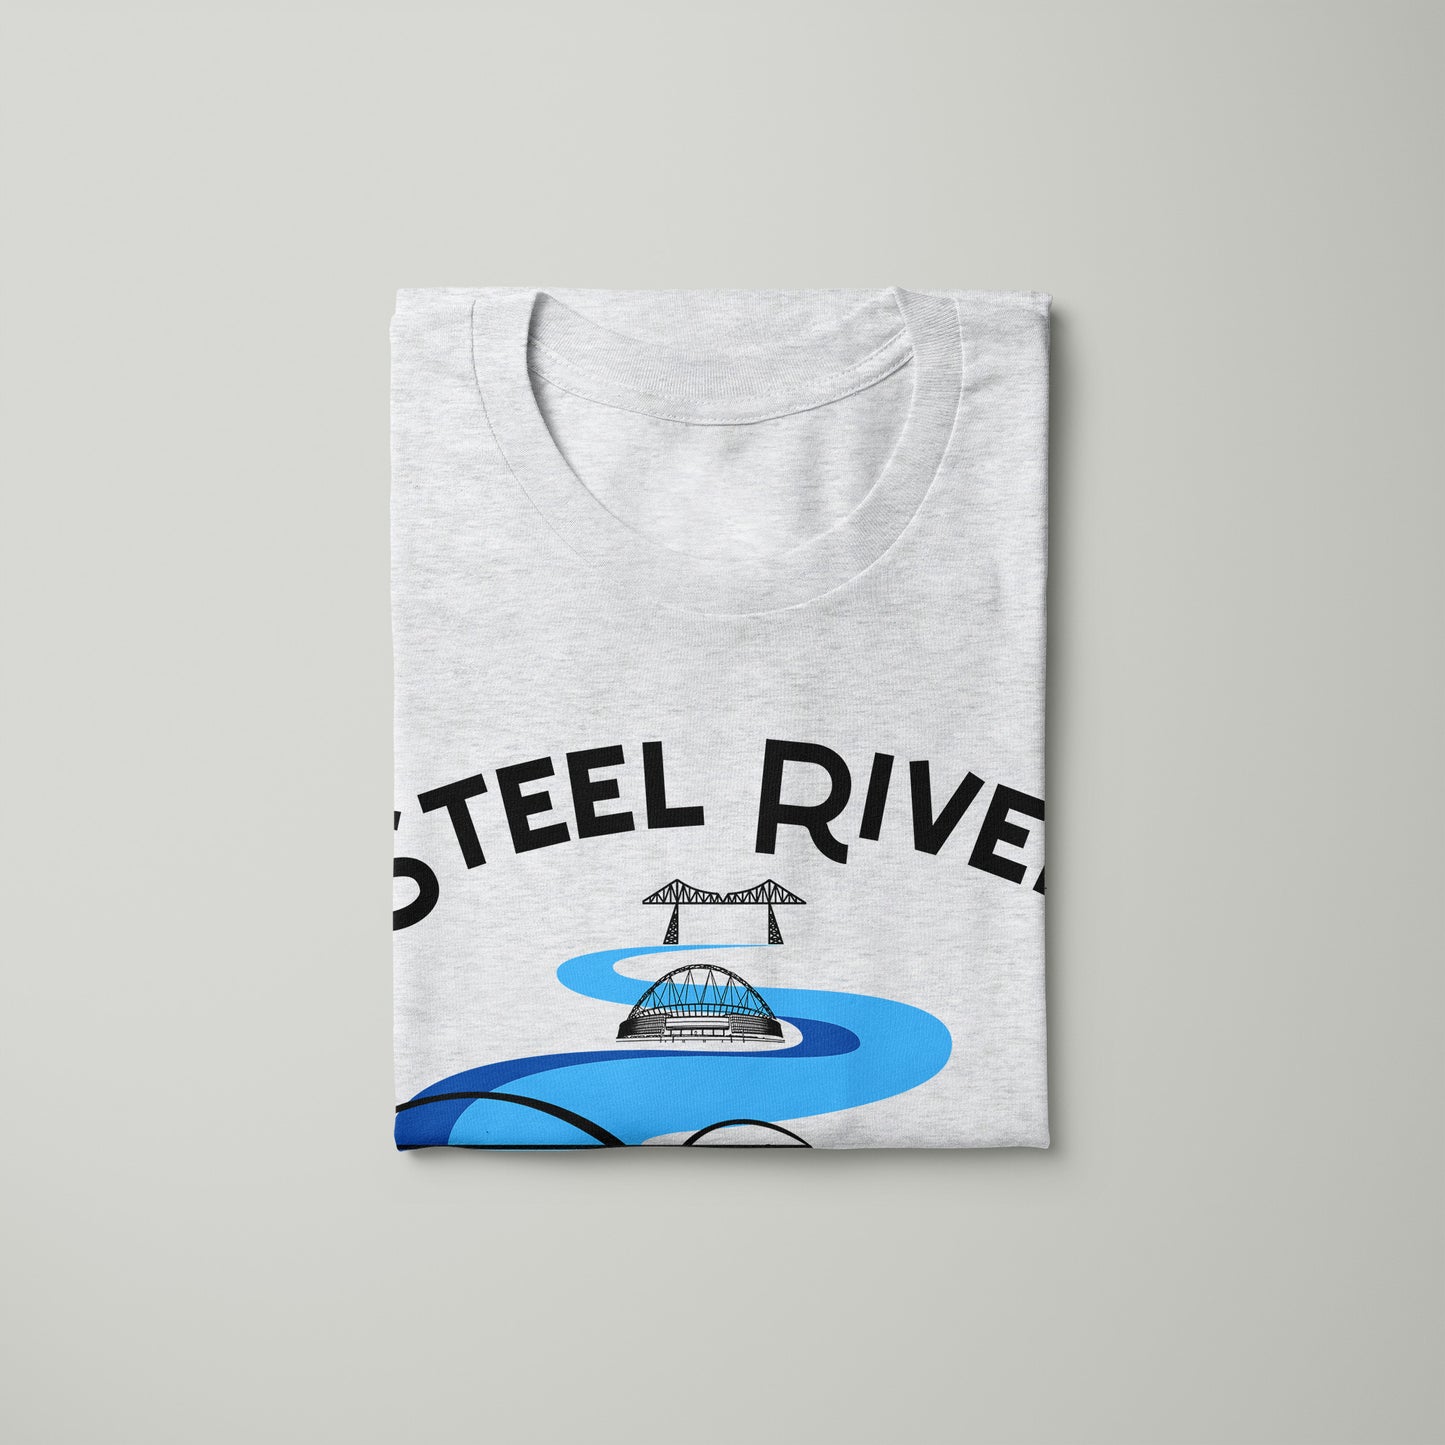 Steel River Crewneck T-shirt